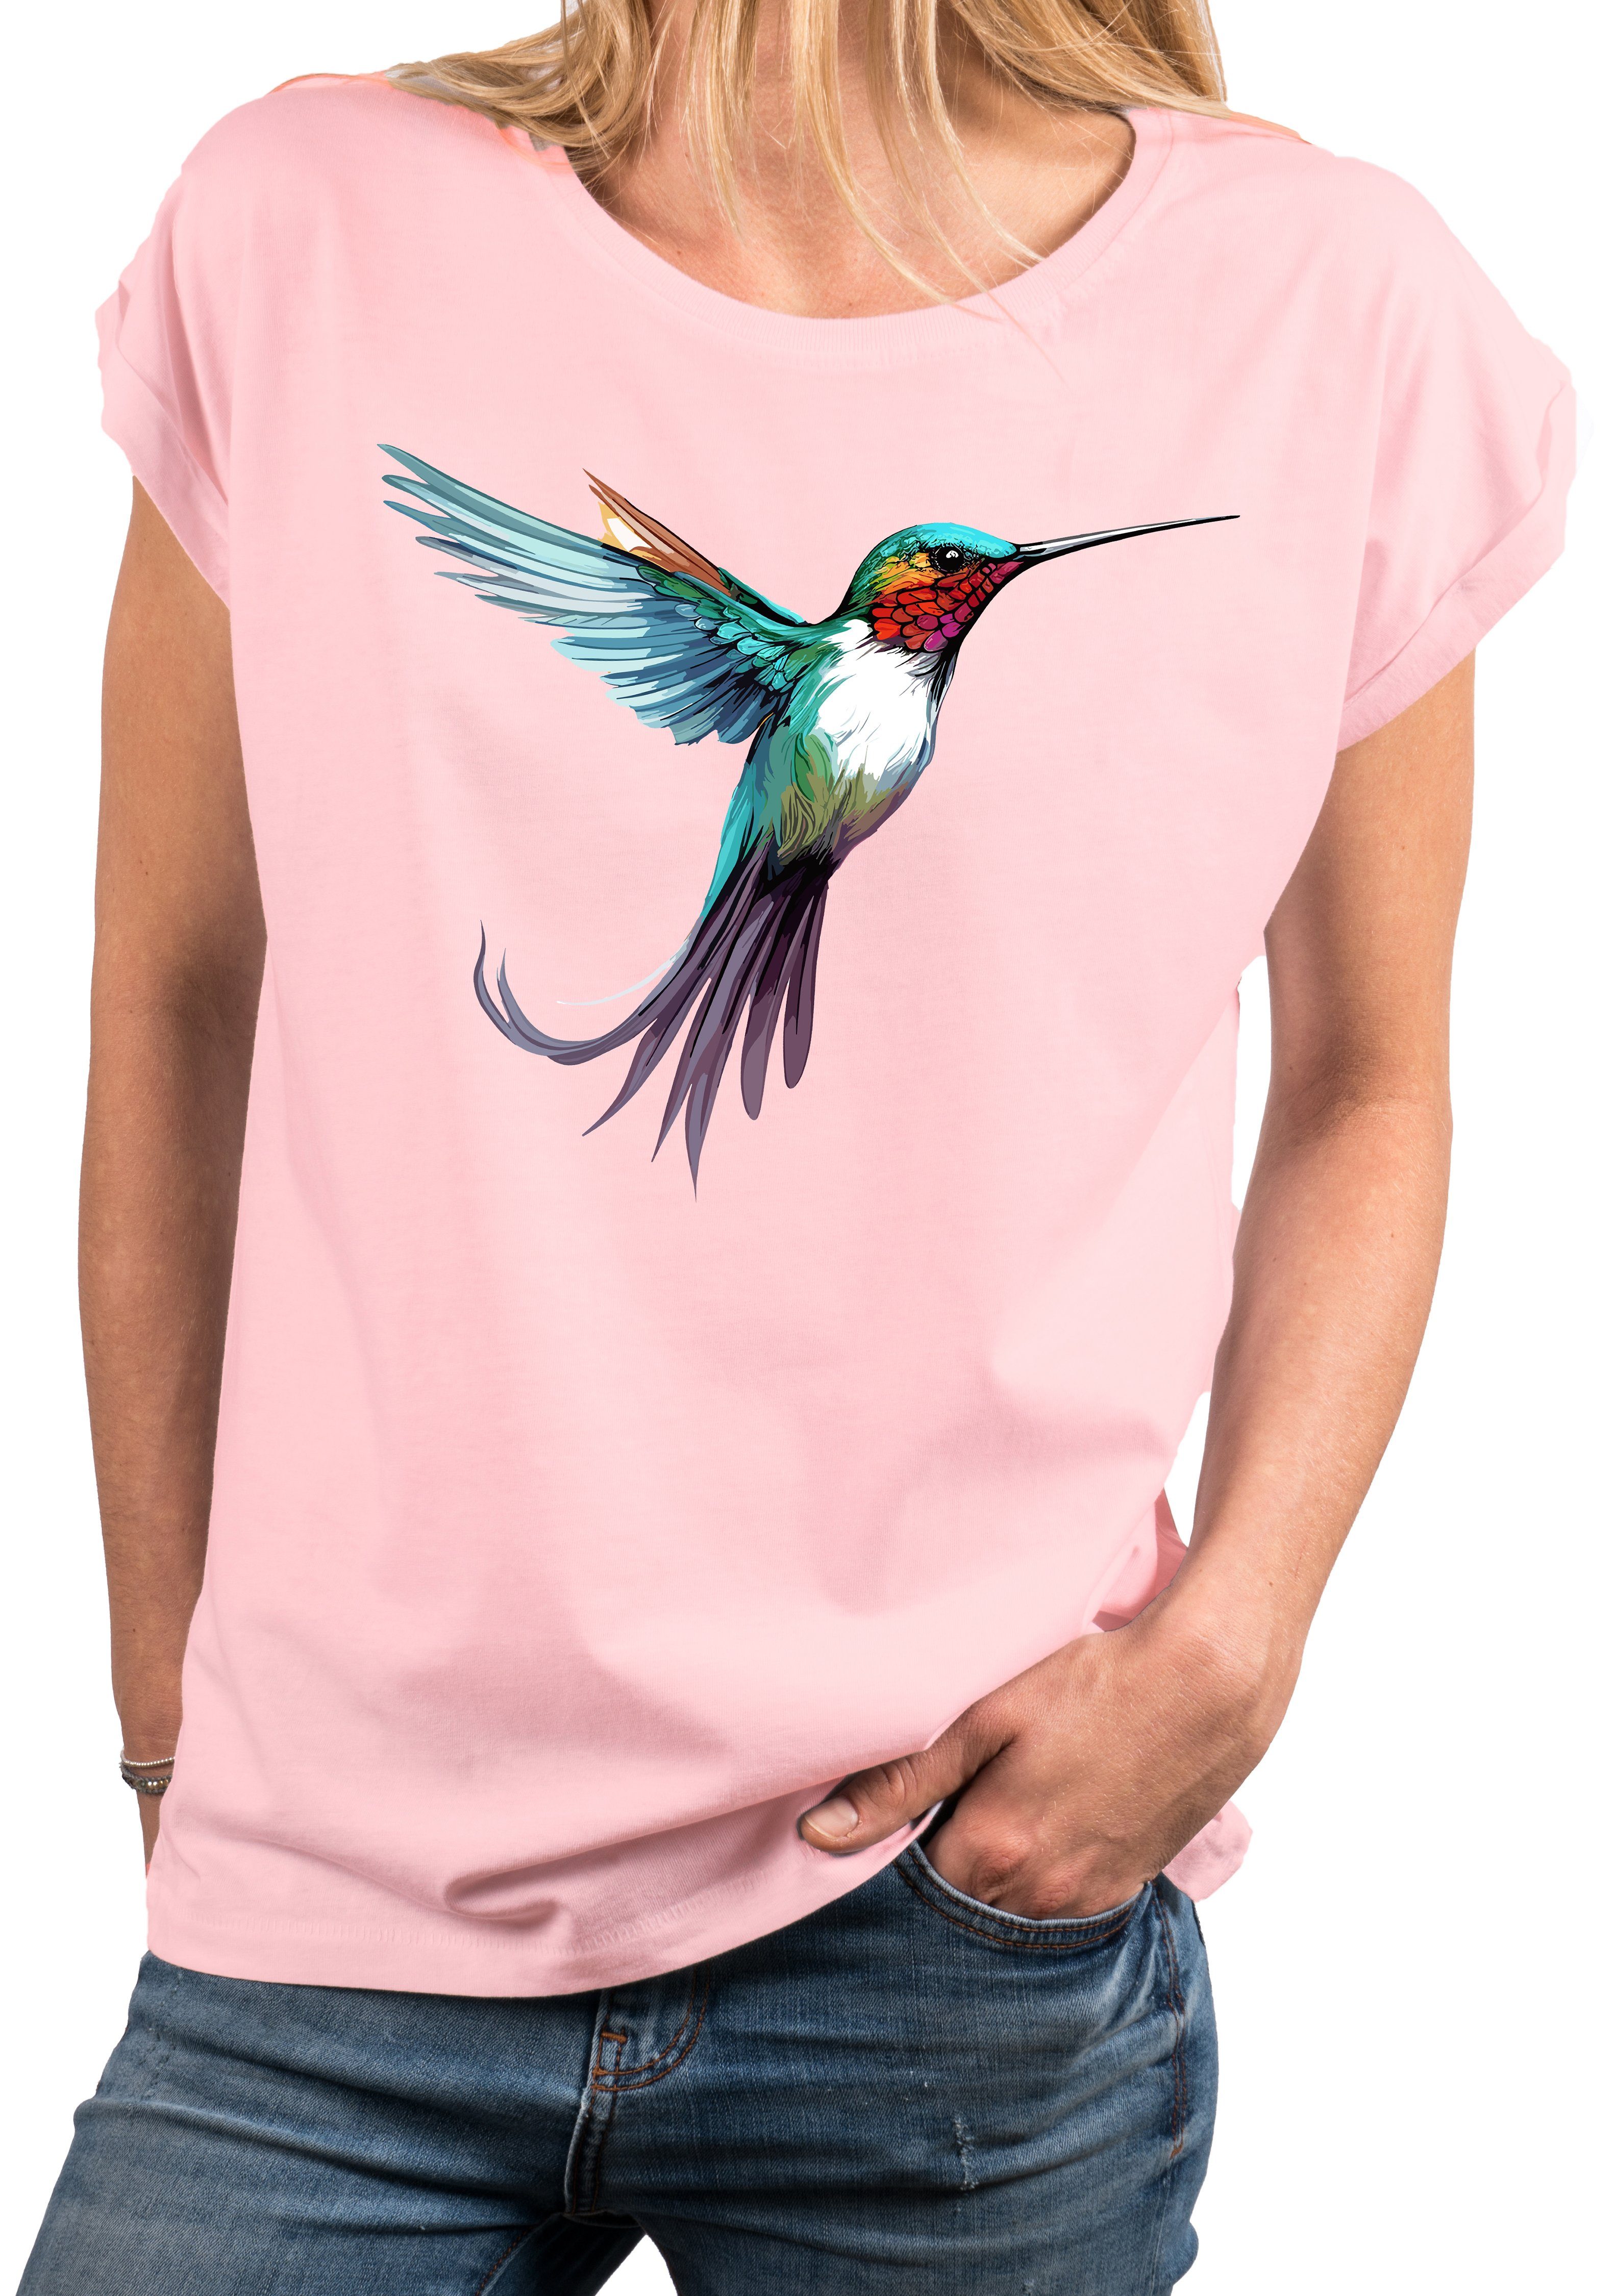 Motiv MAKAYA Print-Shirt Oversize, Kurzarmshirt Kolibri Rosa Damen Vogel Druck Größen Sommer Top große Tunika